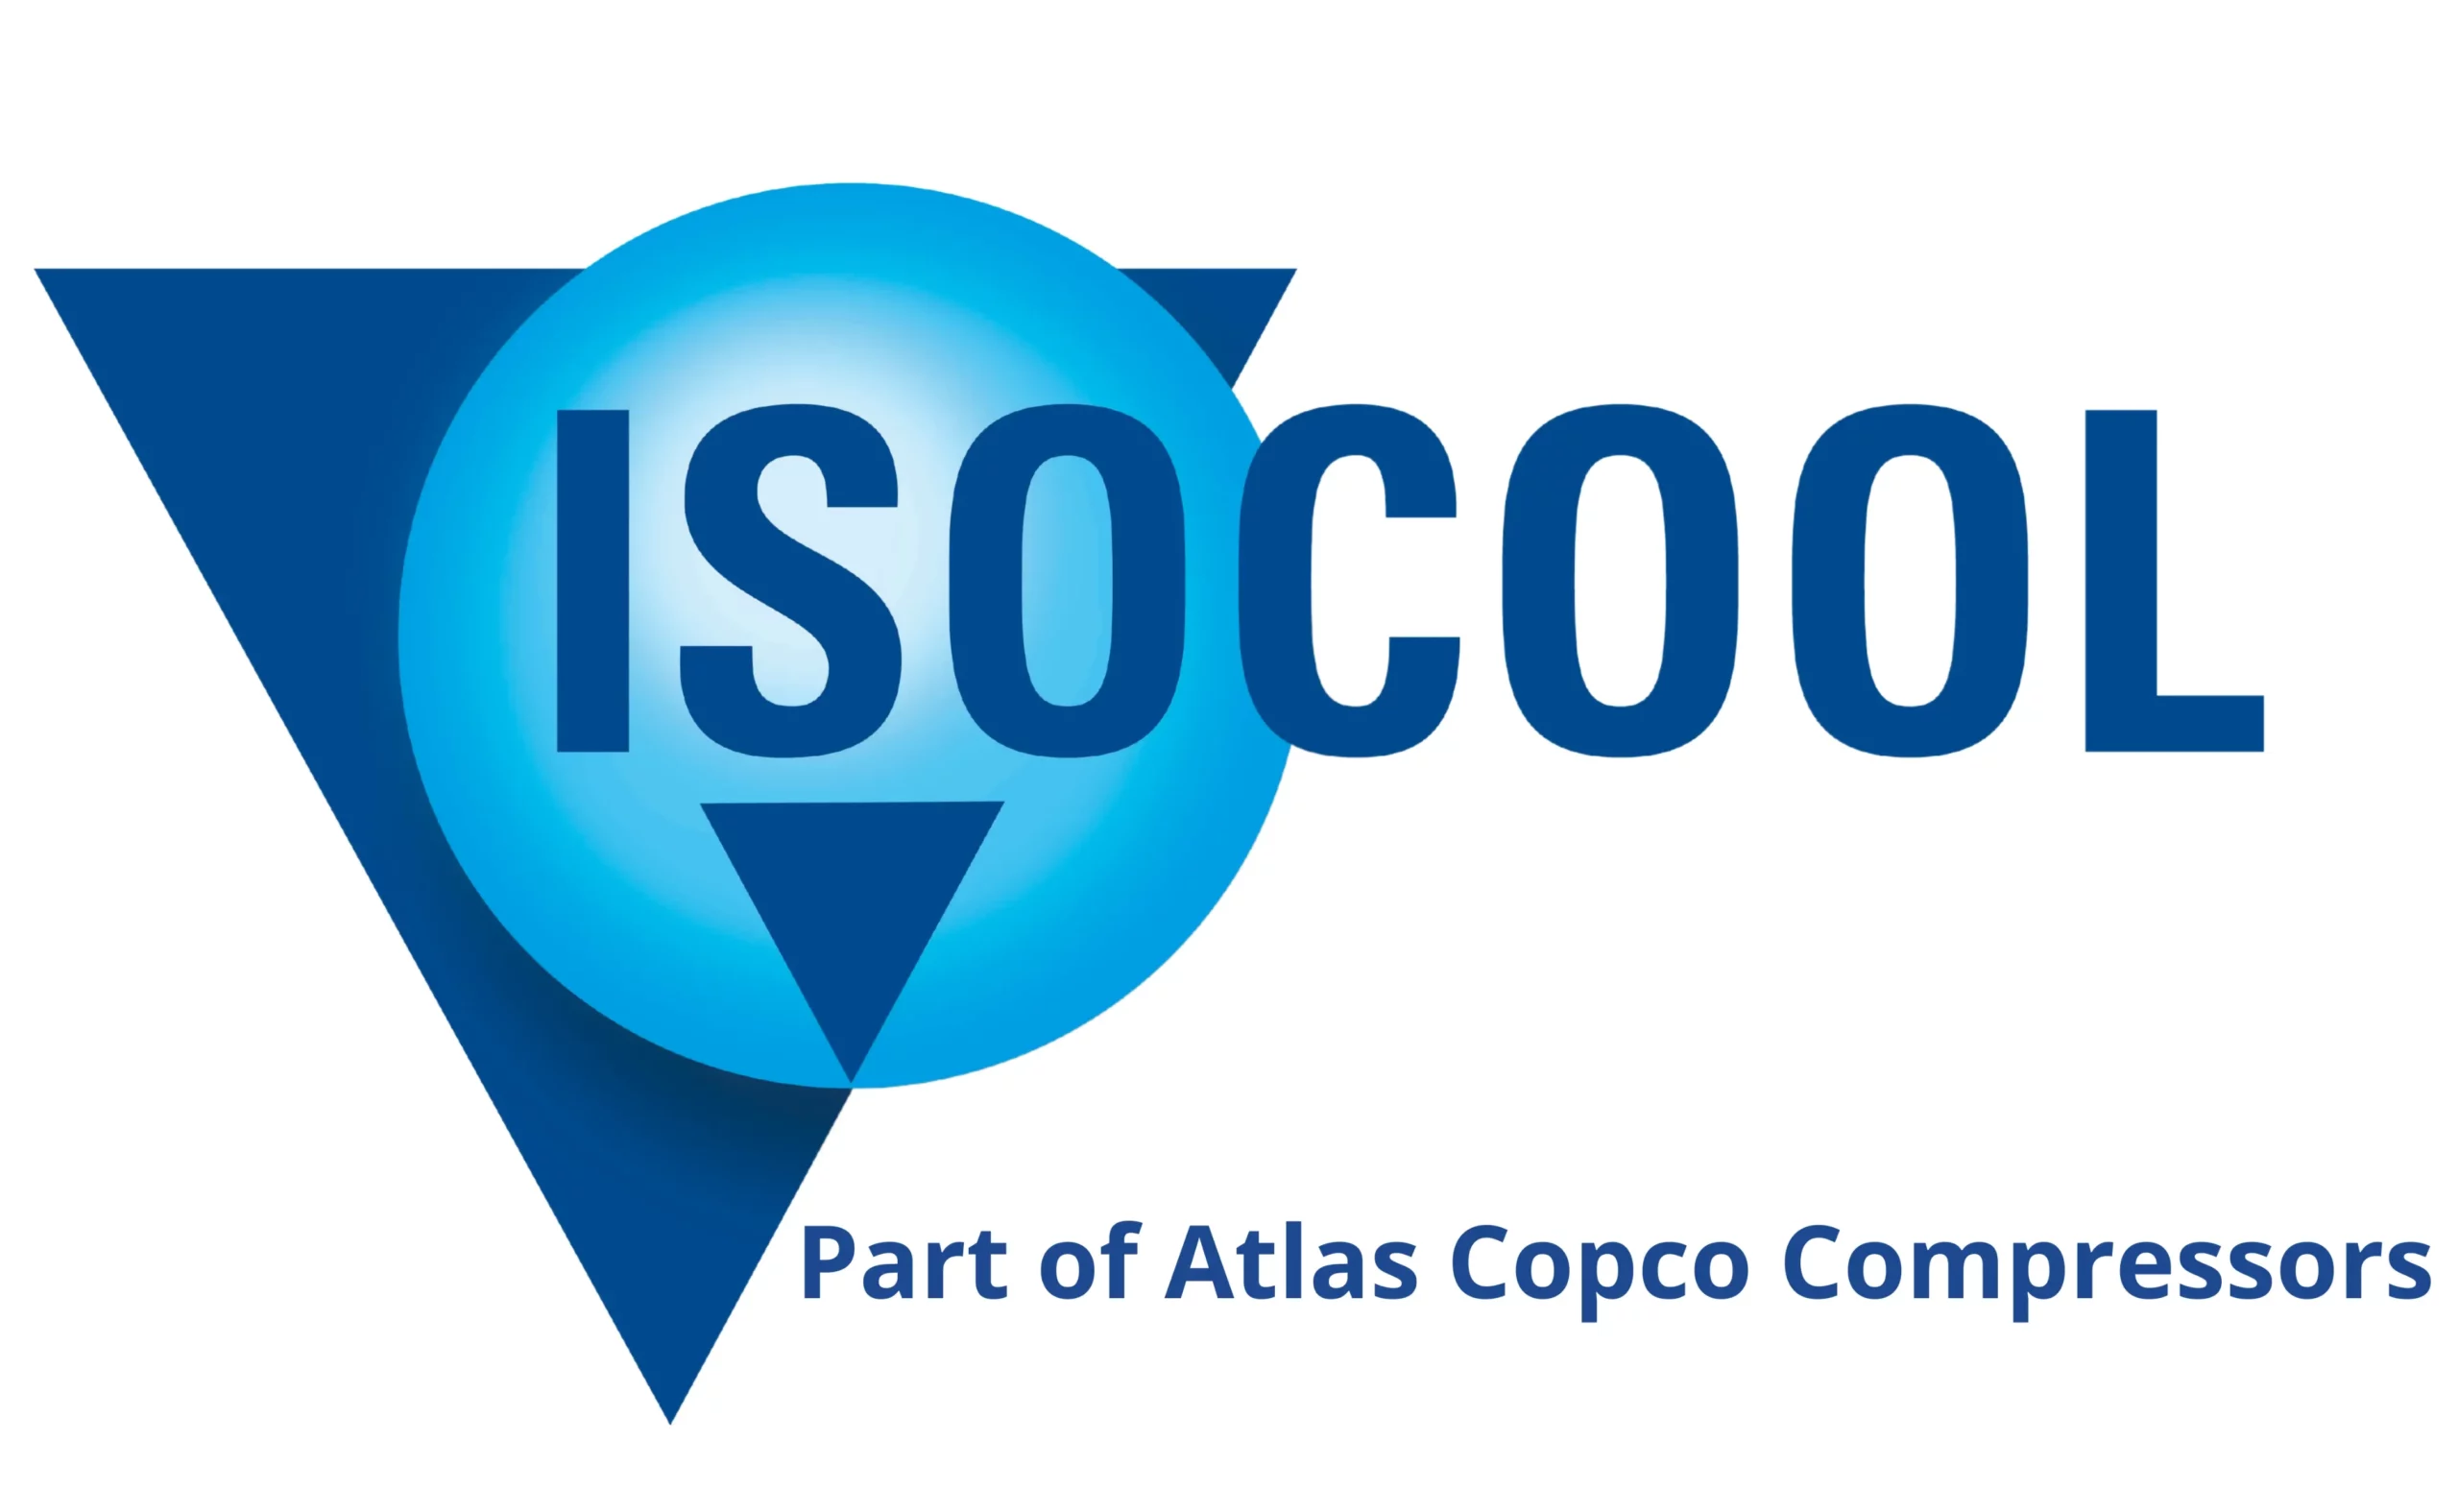 Isocool, part of Atlas Copco Compressors